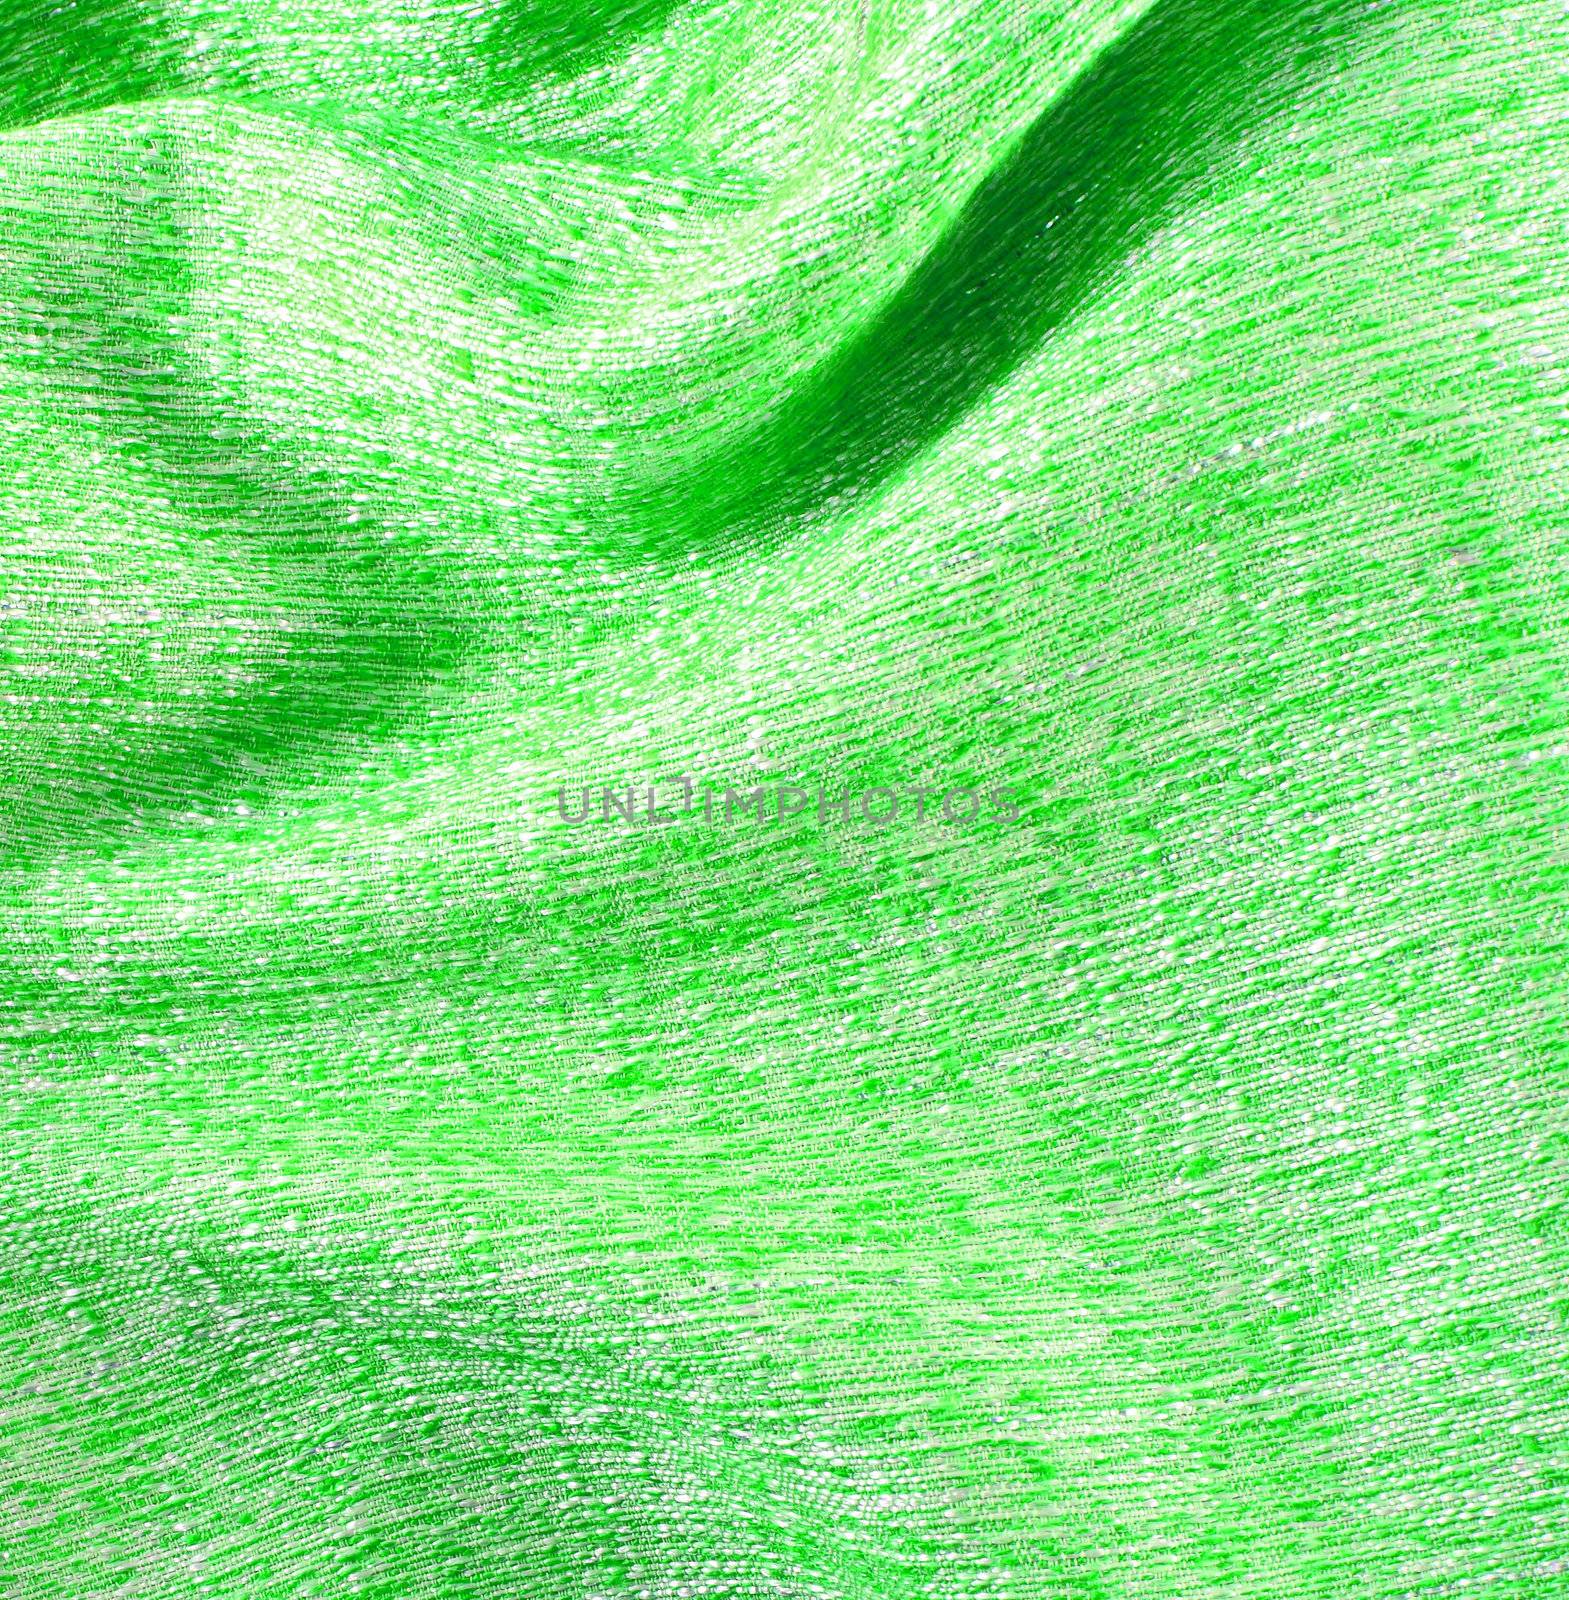 Green crumpled silk fabric textured background  by nuchylee